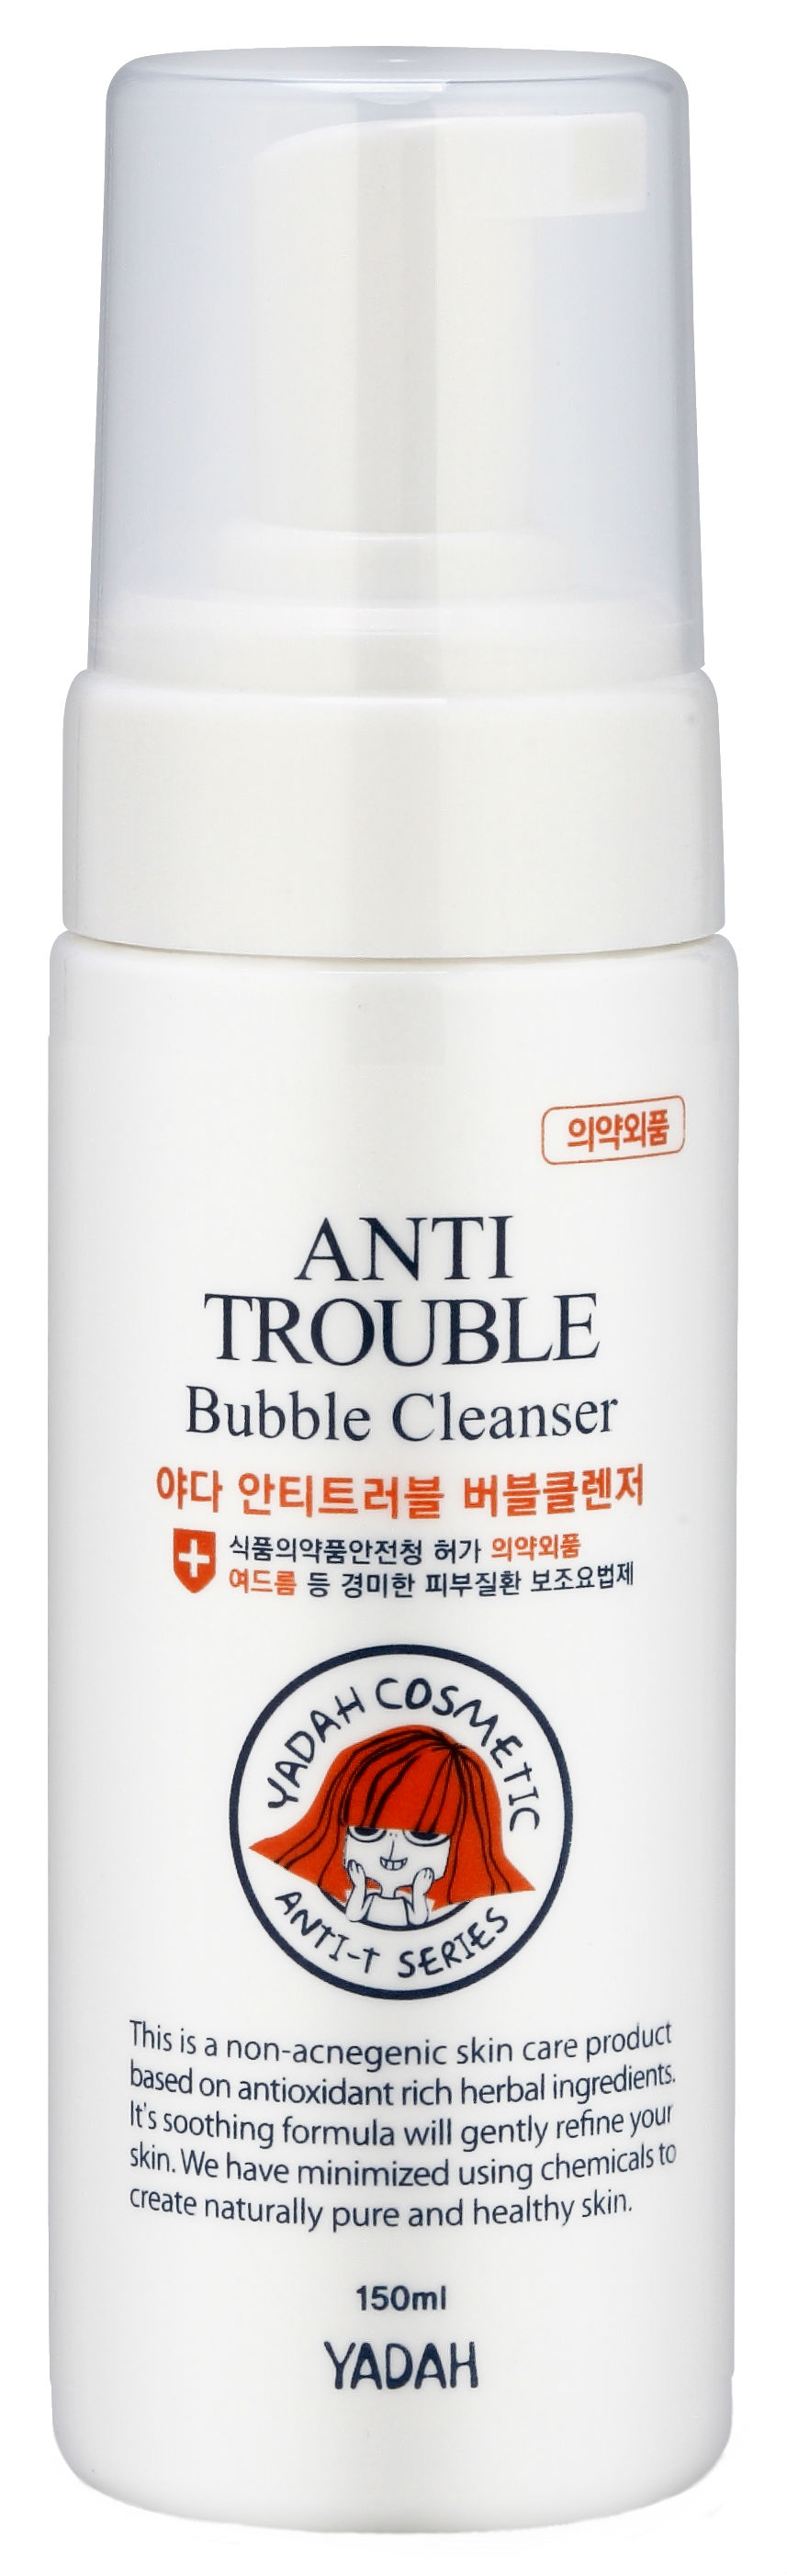 Пенка для умывания Yadah Anti Trouble Bubble Cleanser 150 мл витаминная bubble пенкадля умывания 175мл